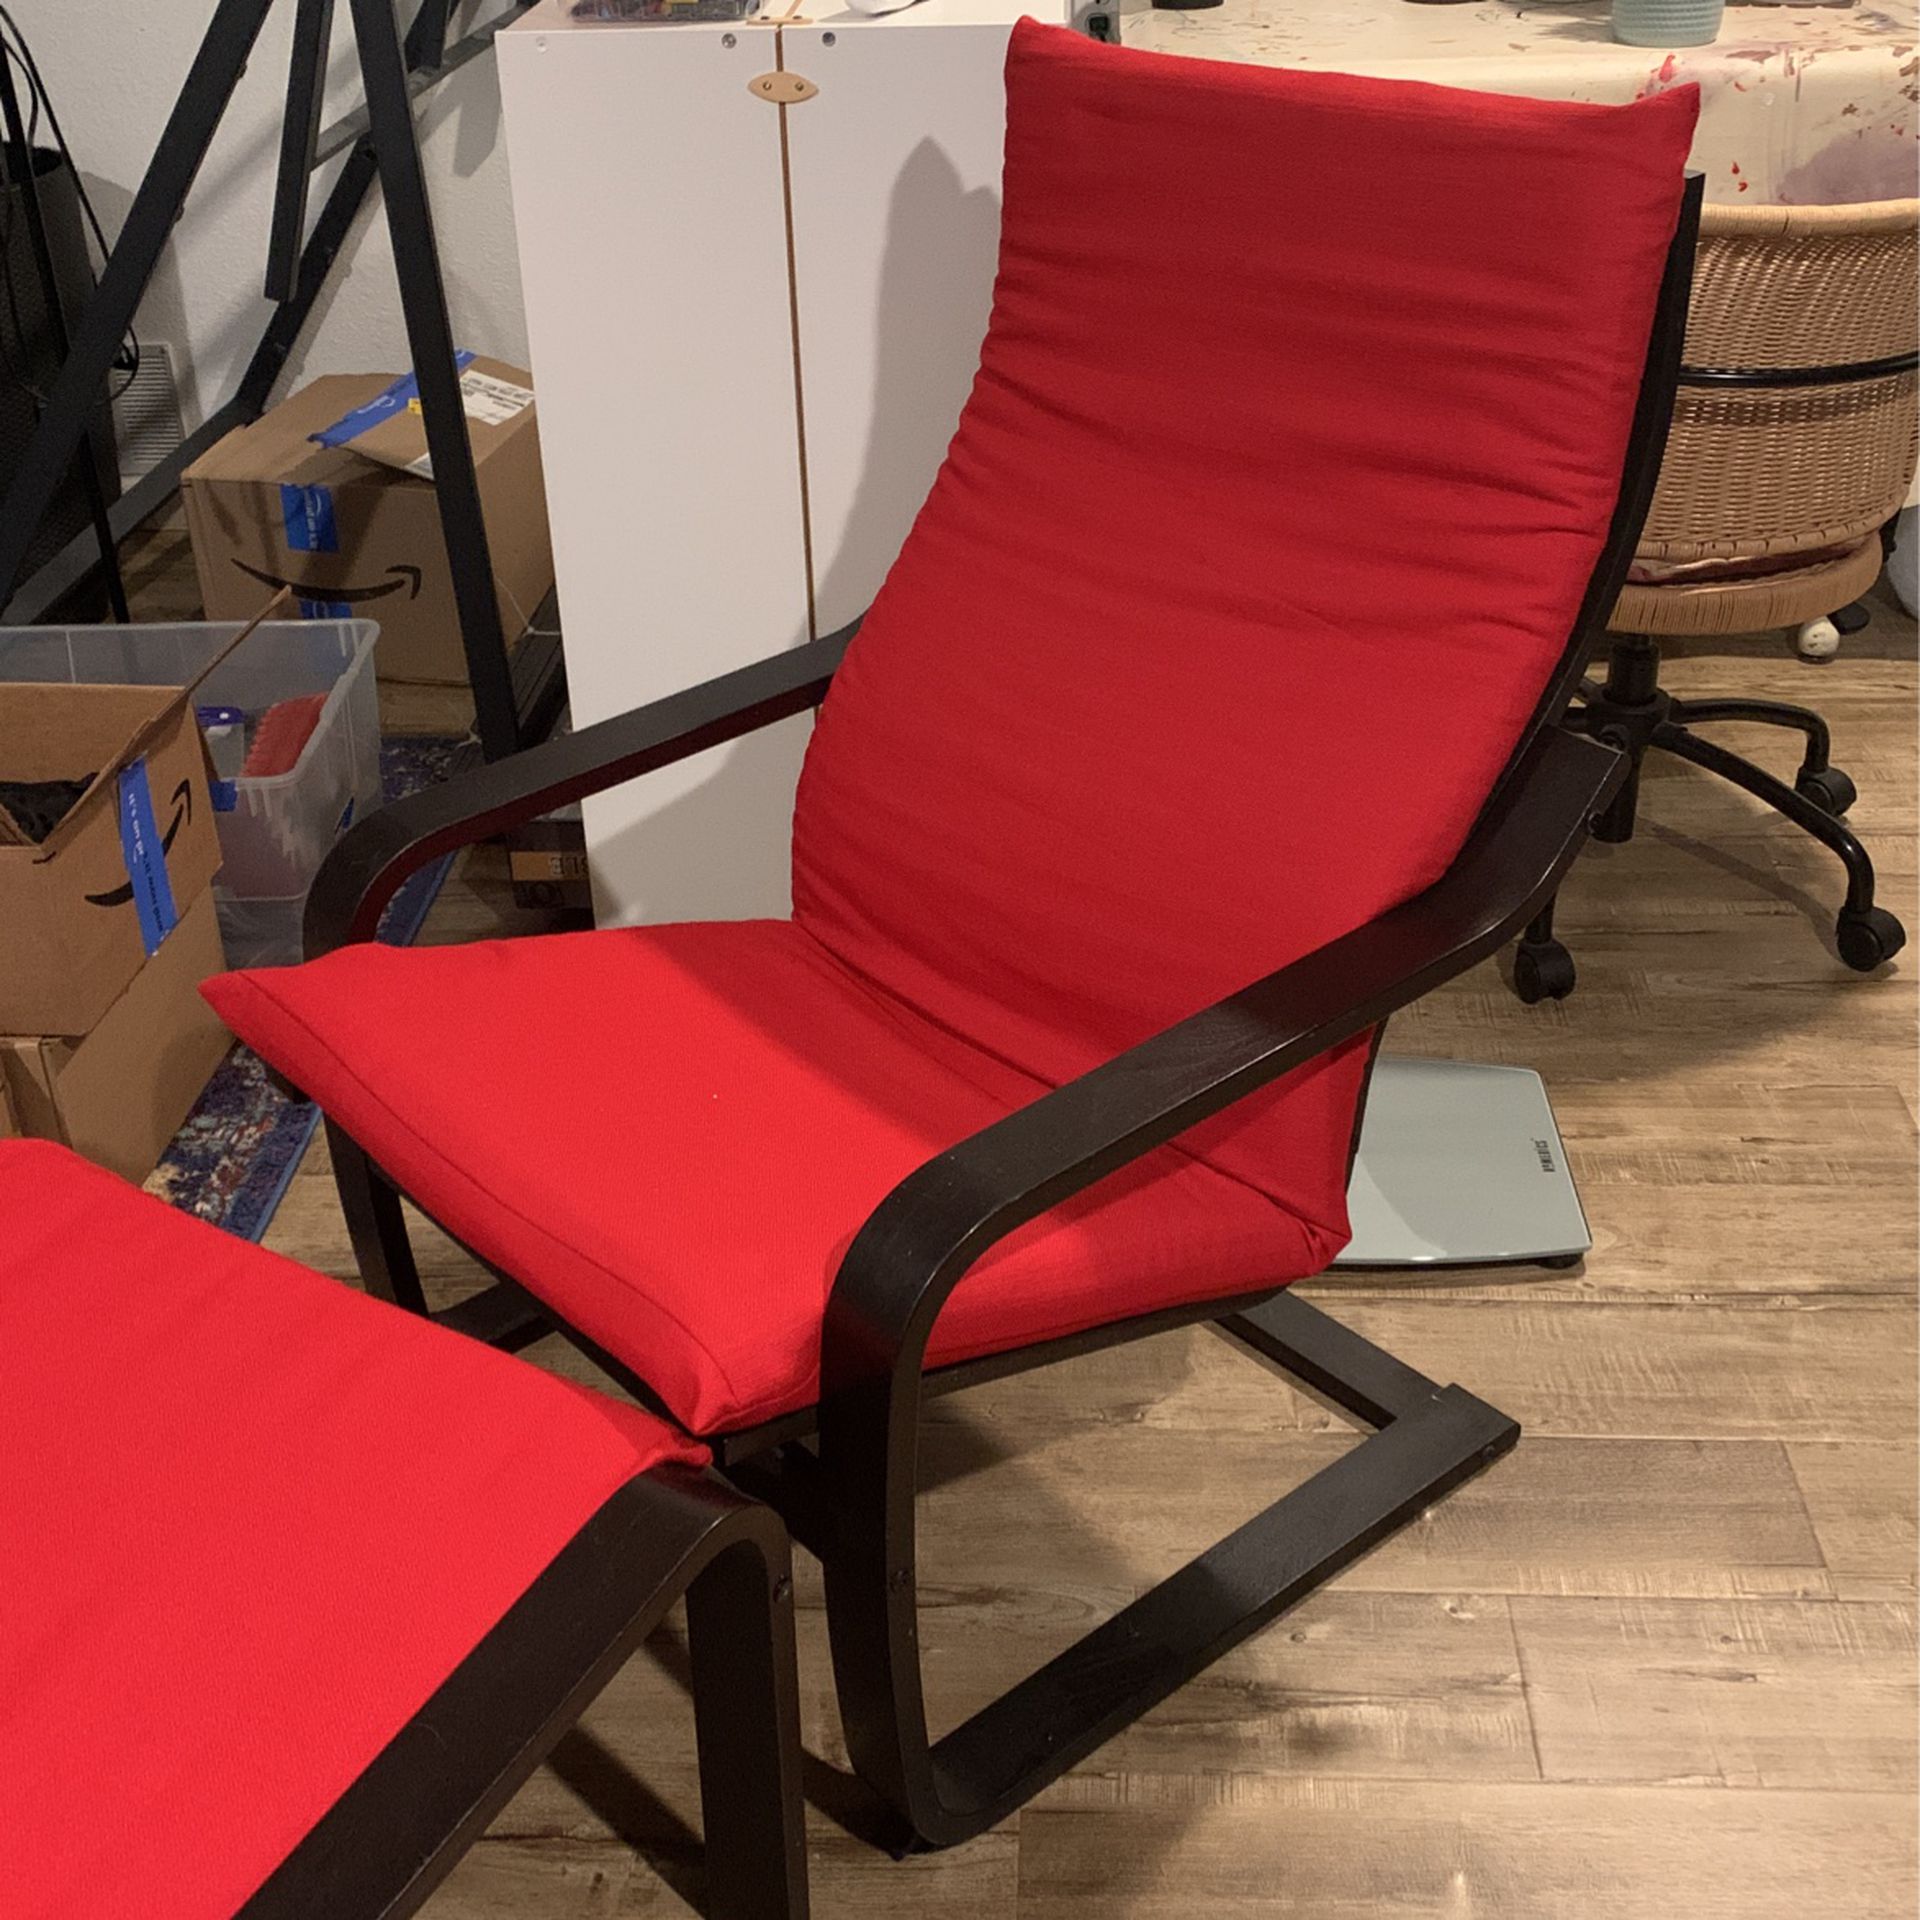 IKEA Chair And Matching Ottoman